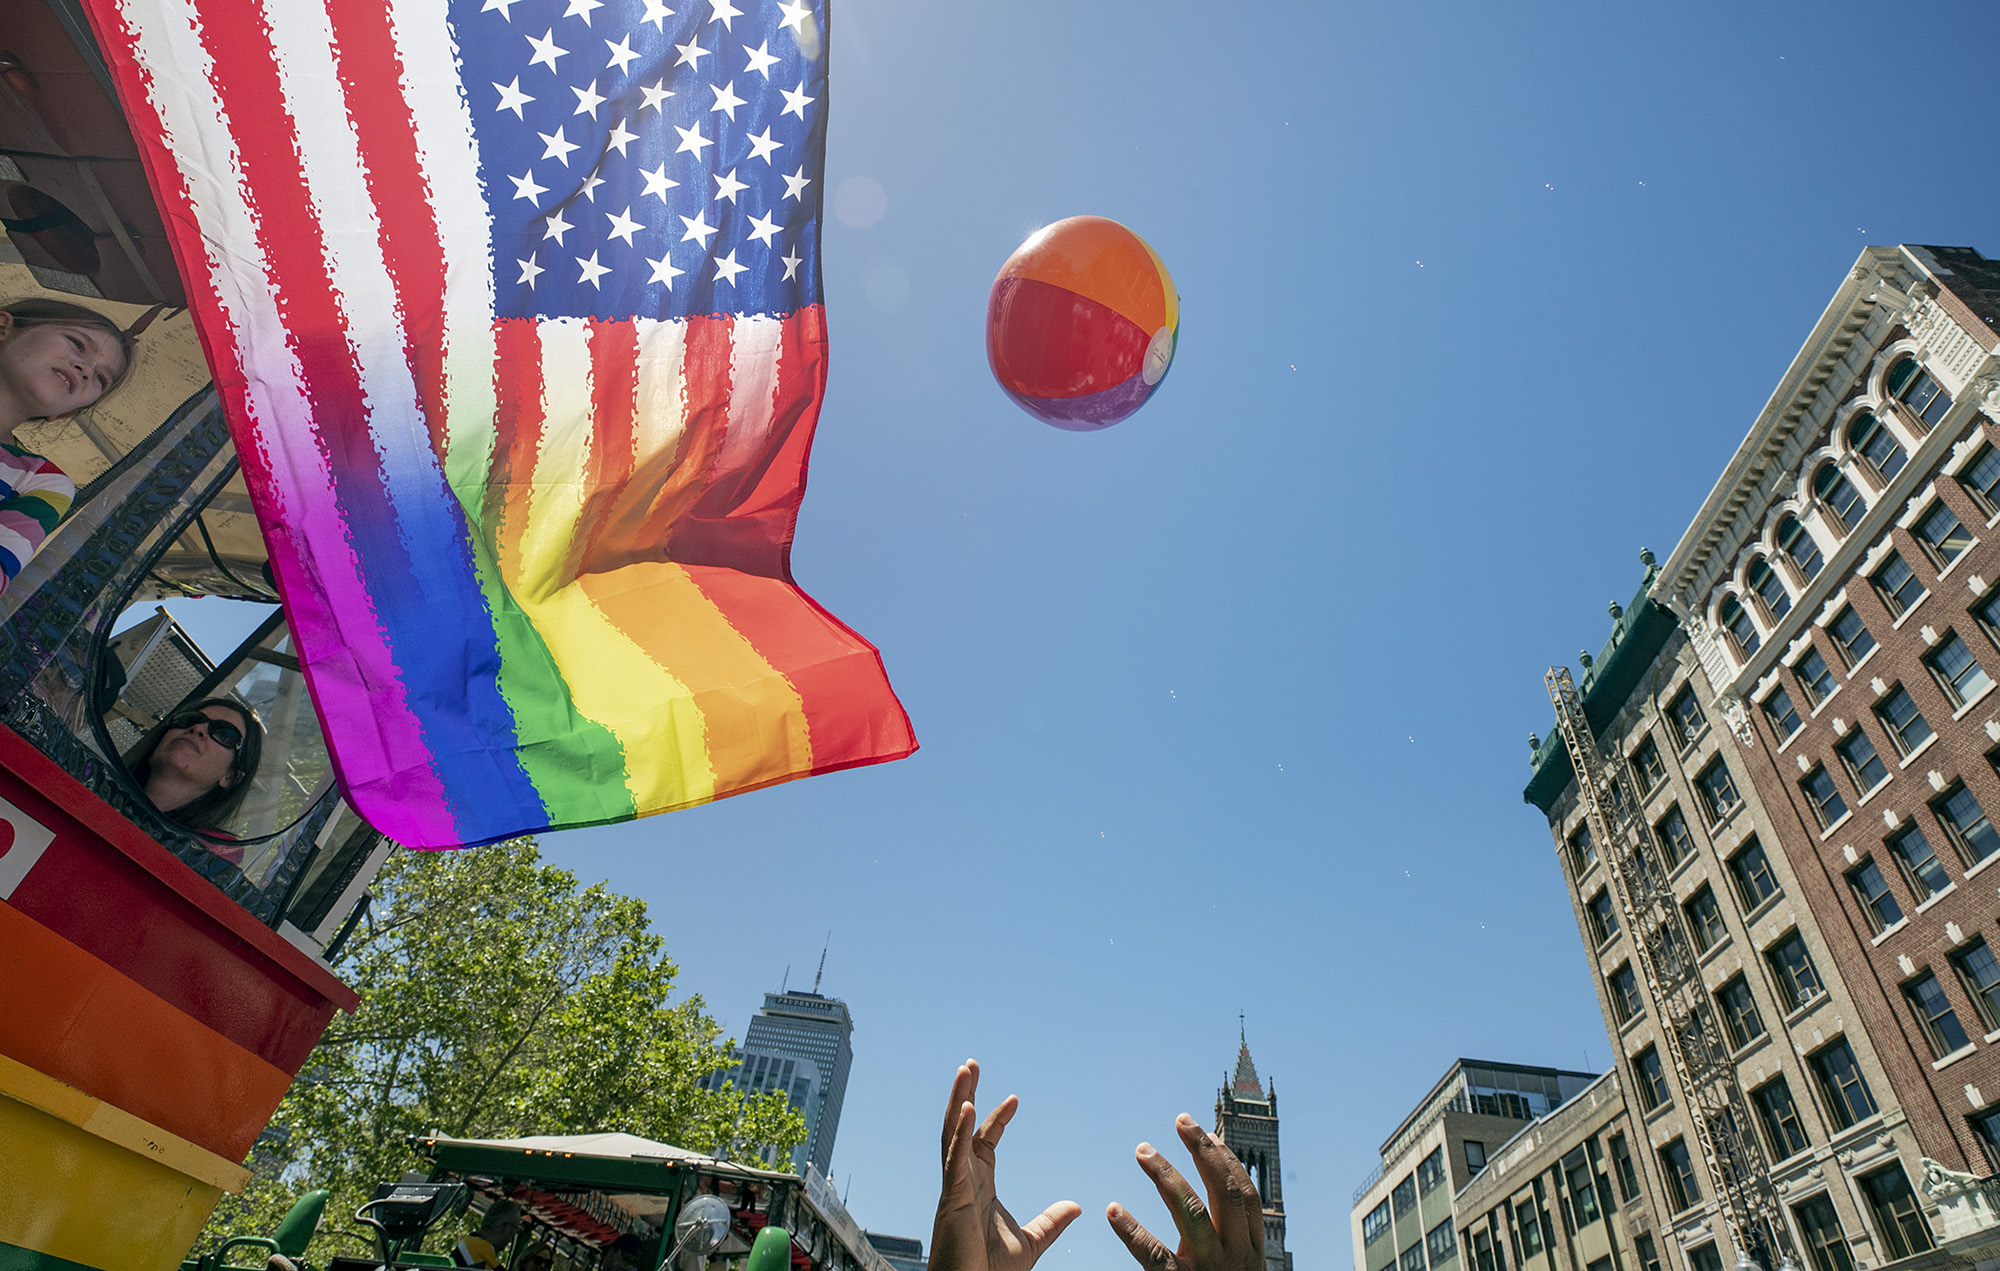 Pride Parade Not Planned For Boston In 2022 - CBS Boston